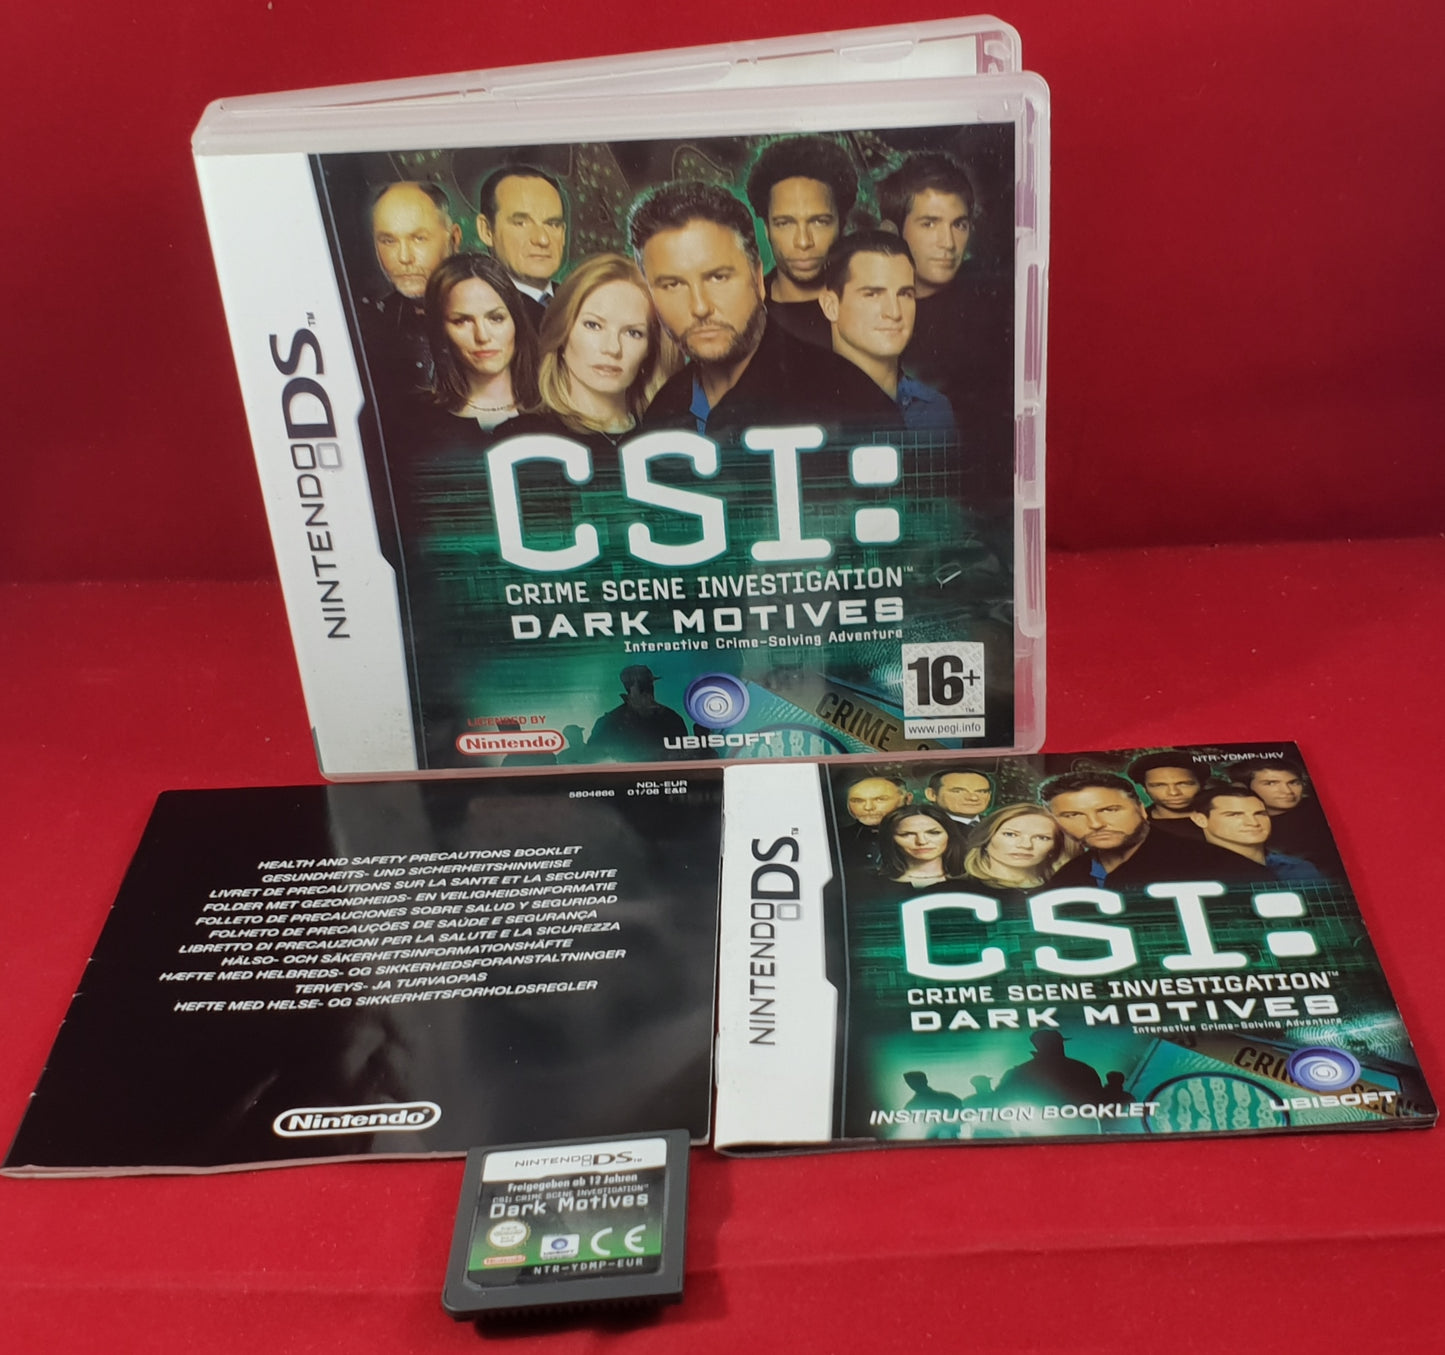 CSI Crime Scene Investigation Dark Motives Nintendo DS Game